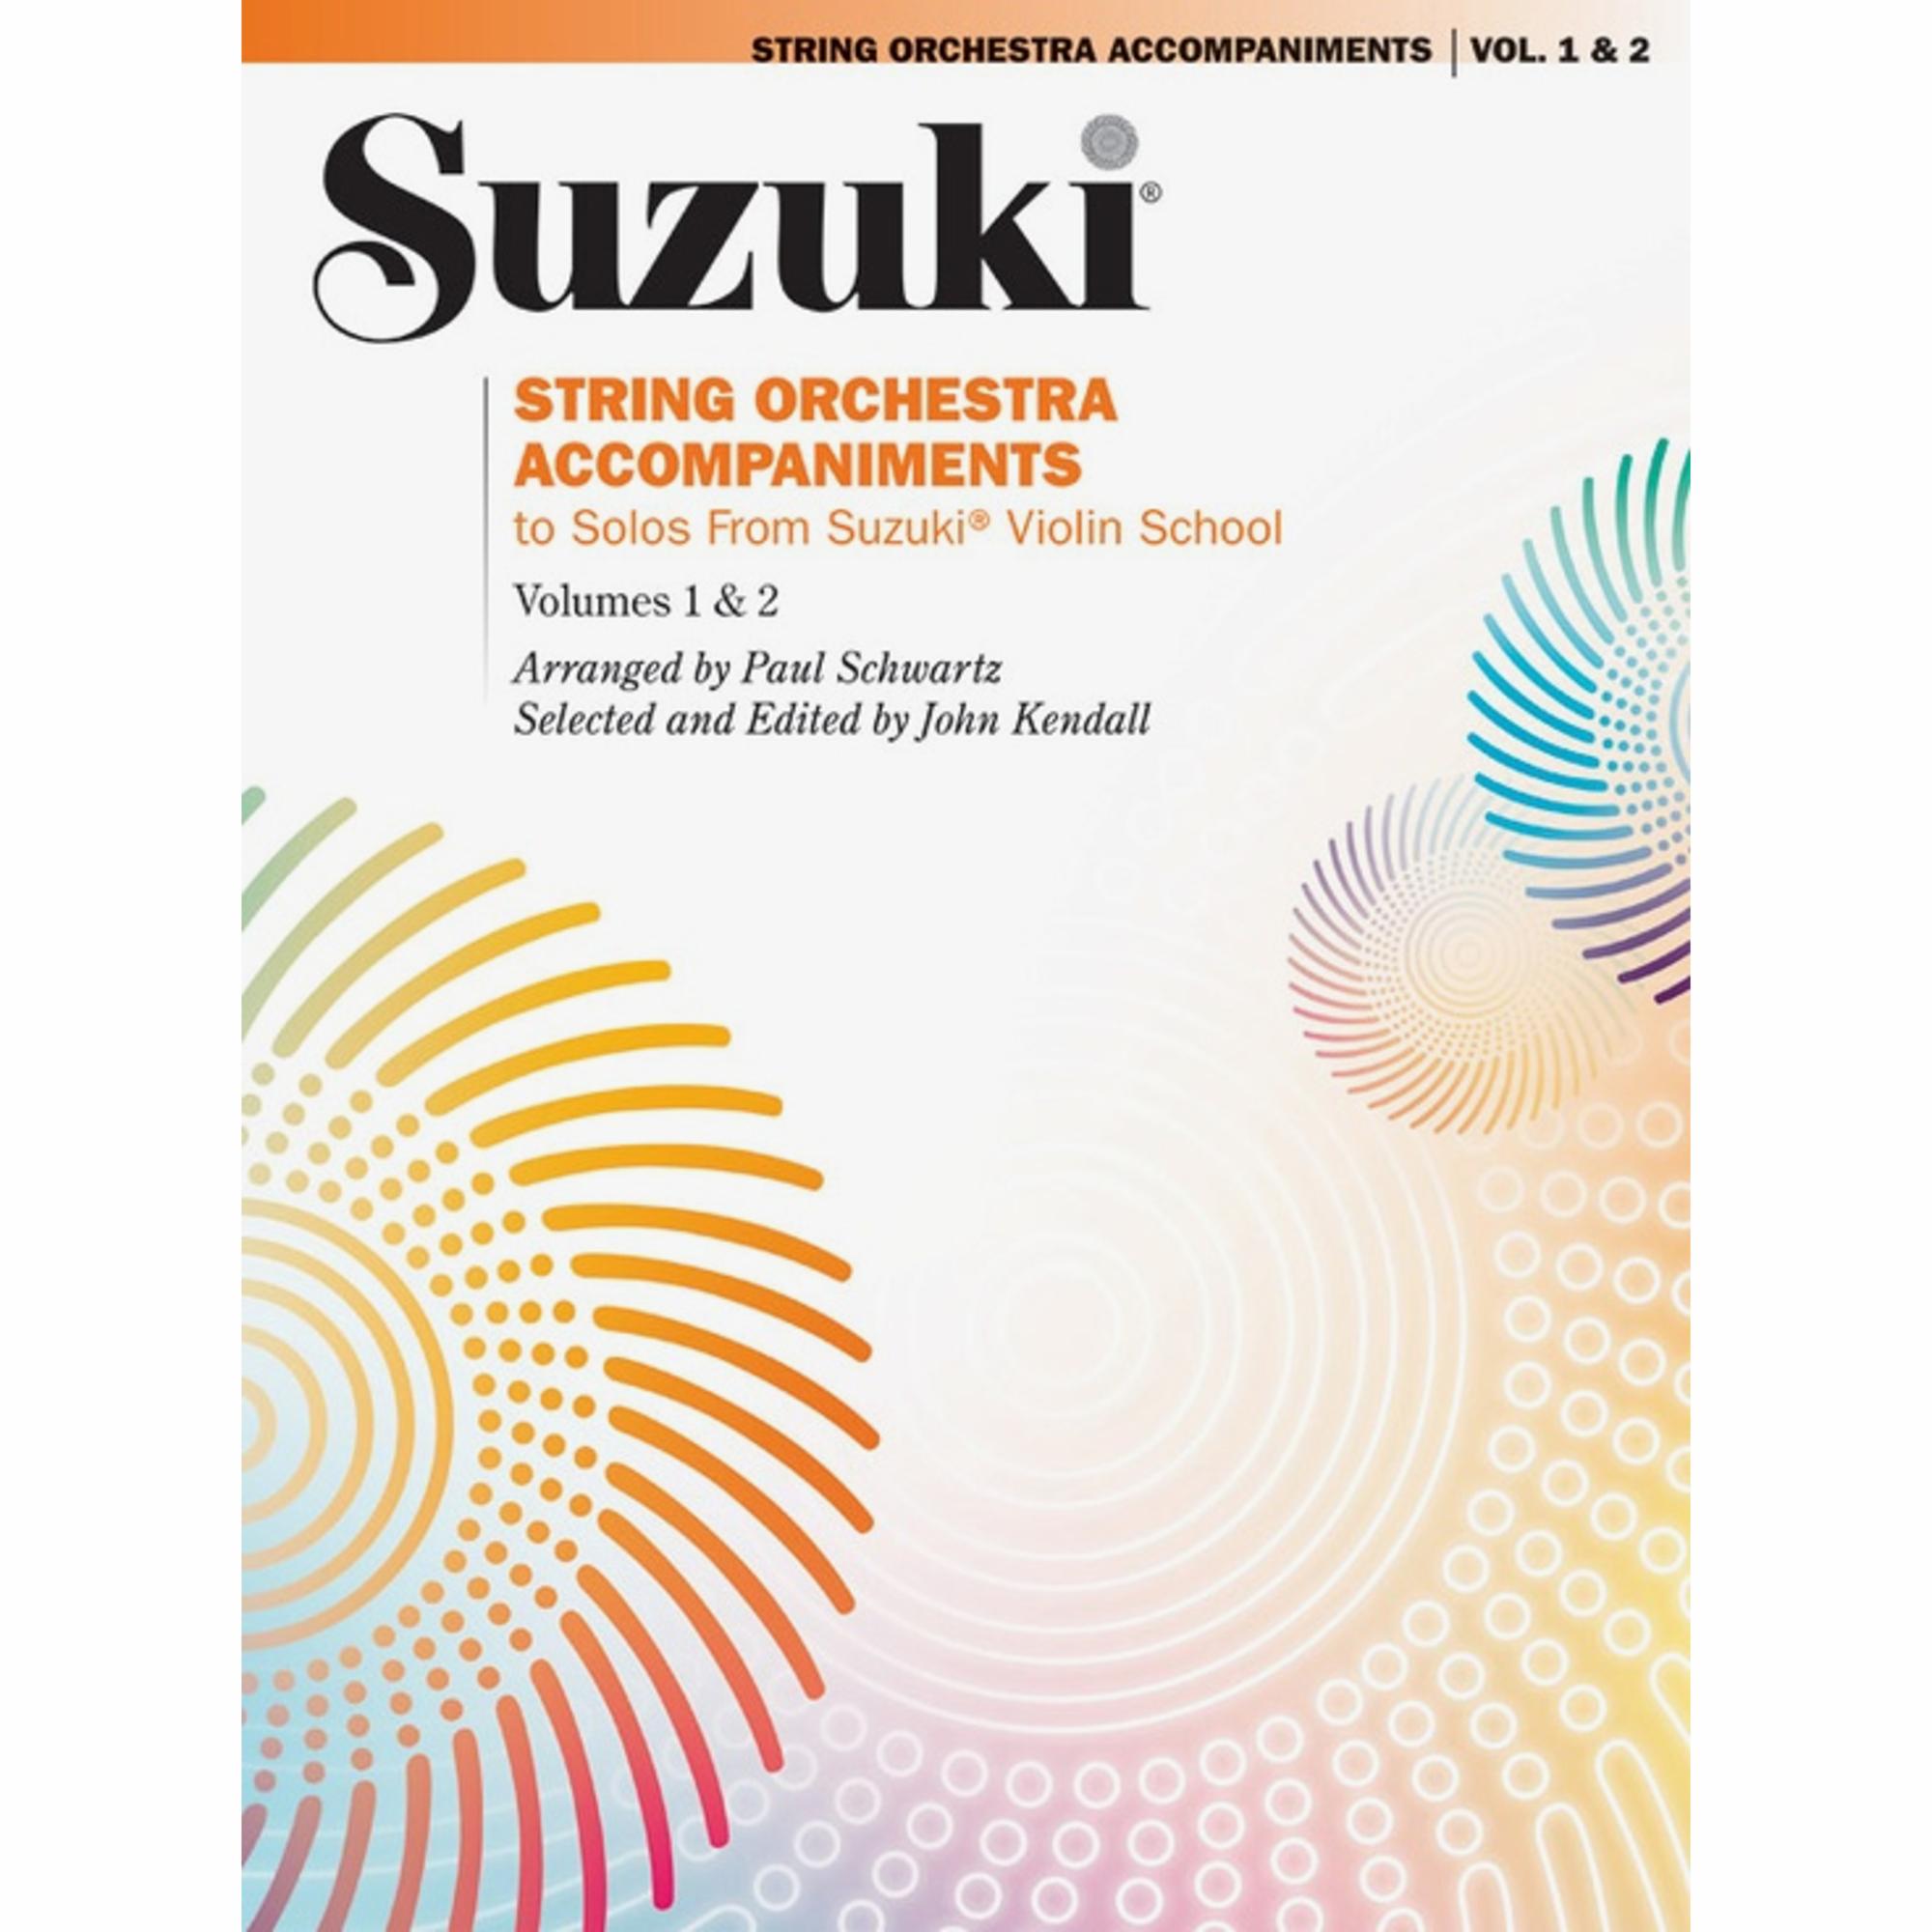 String Orchestra Accompaniments to Suzuki Violin Pieces